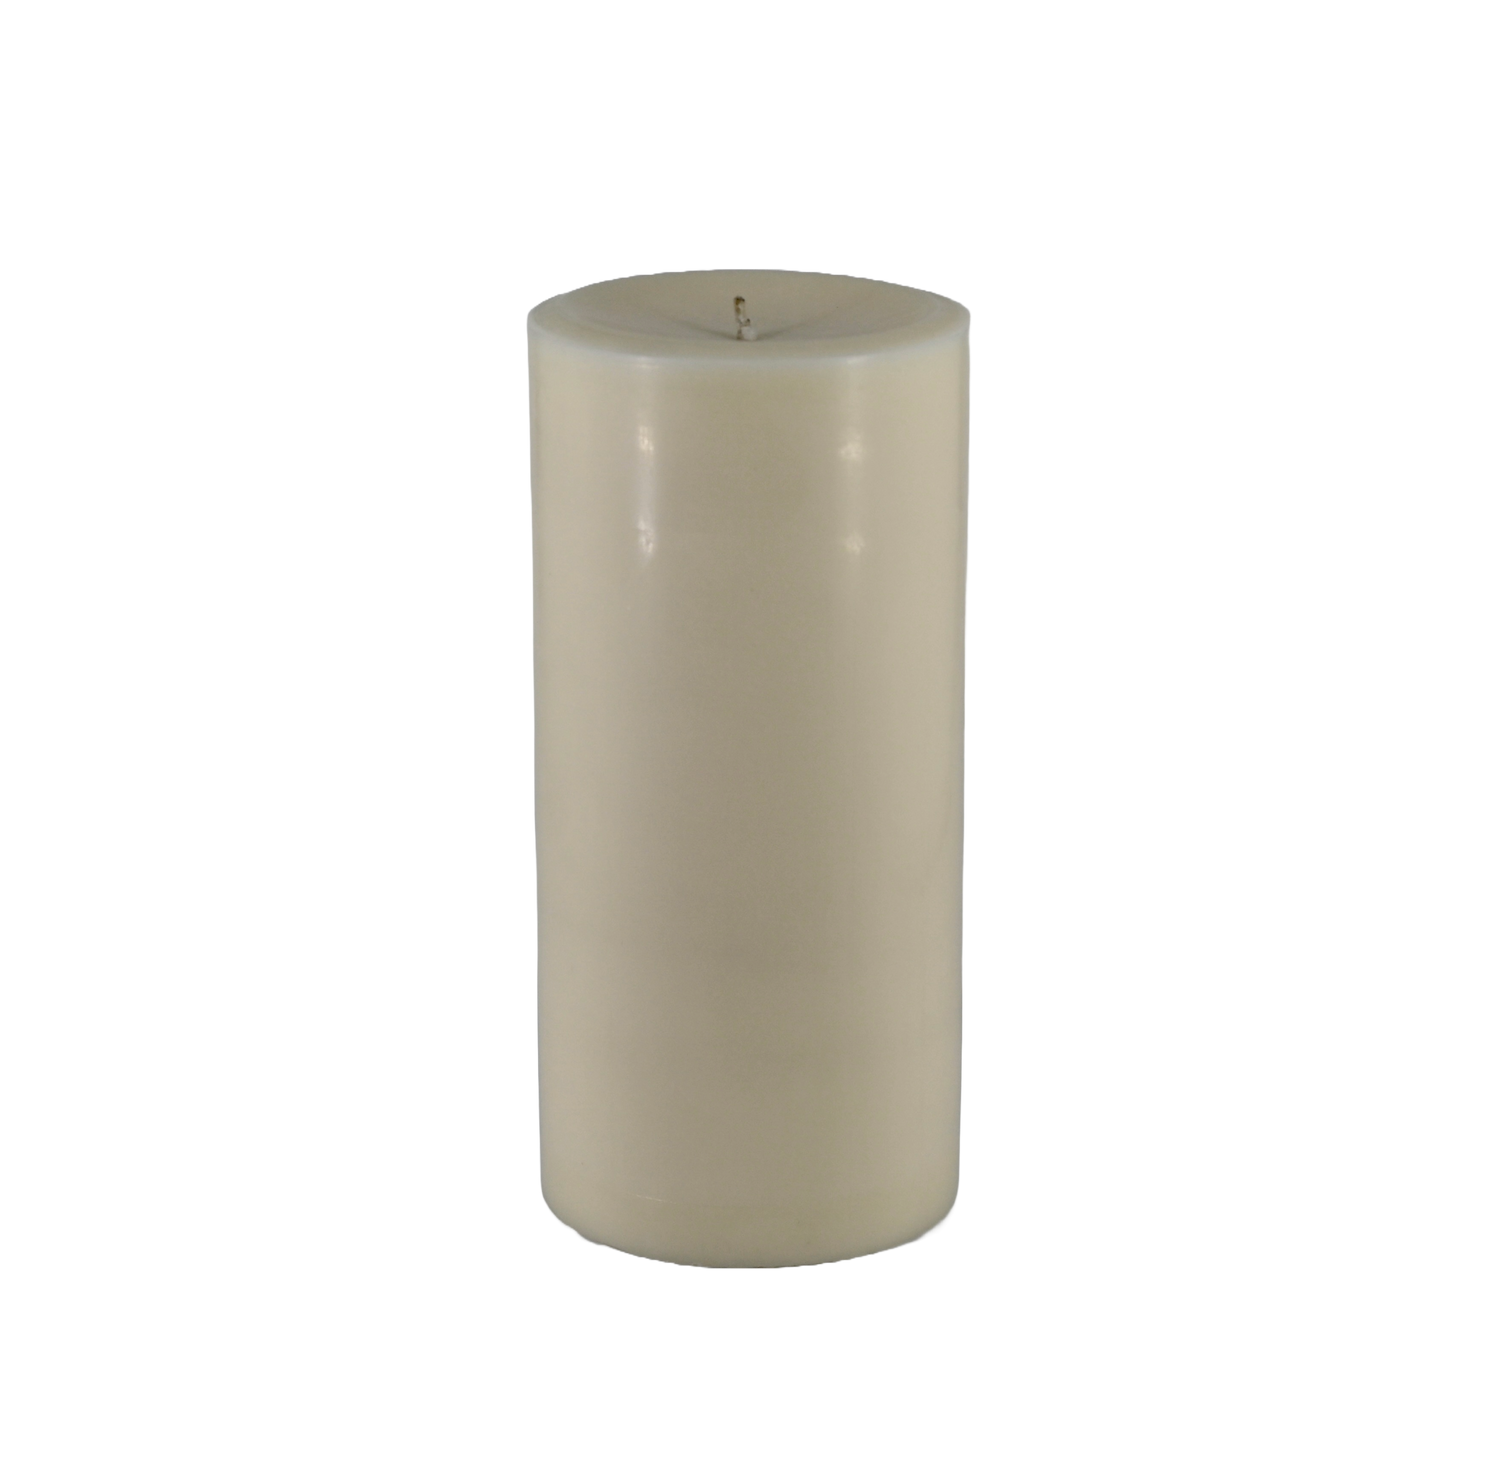 3x6.5 inch soy pillar candle